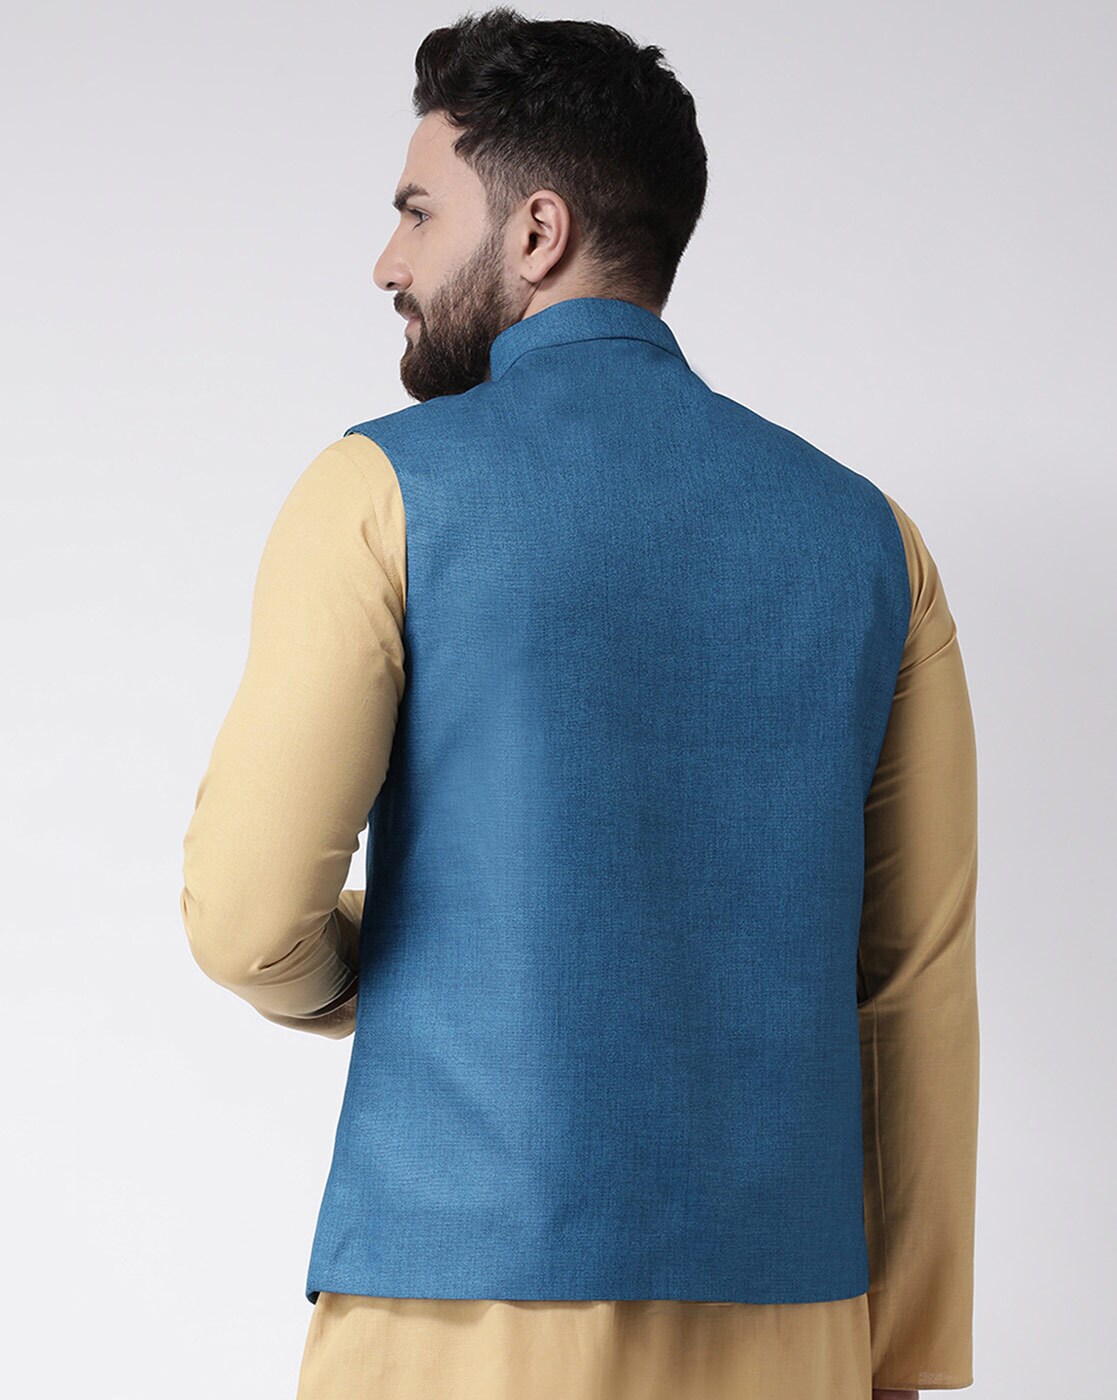 Men's Merino Abstract Nehru Jacket in BrownS | Nehru jackets, Jackets,  Jacket store